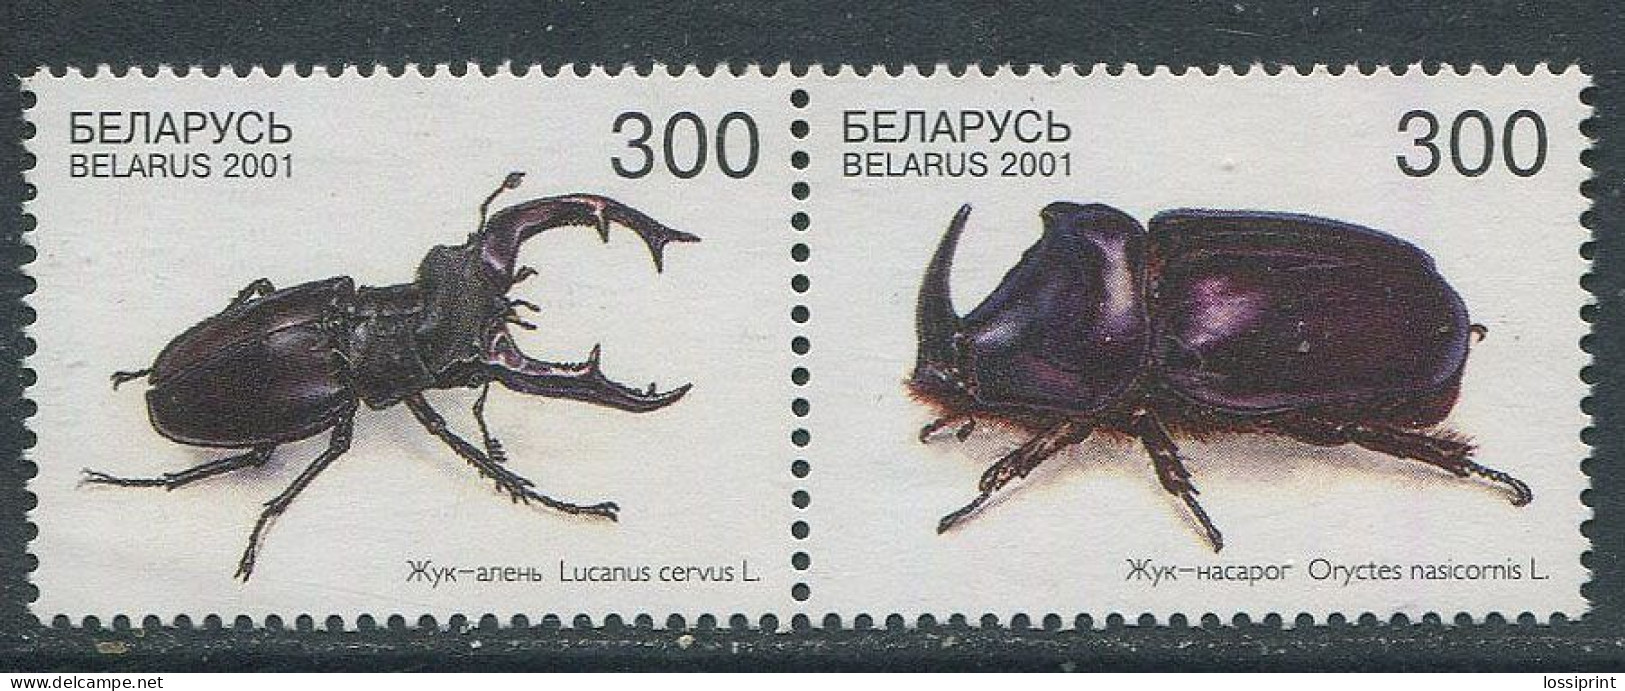 Belarus:Unused Stamps Pair Insects, Bugs, Beetles, 2001, MNH - Belarus